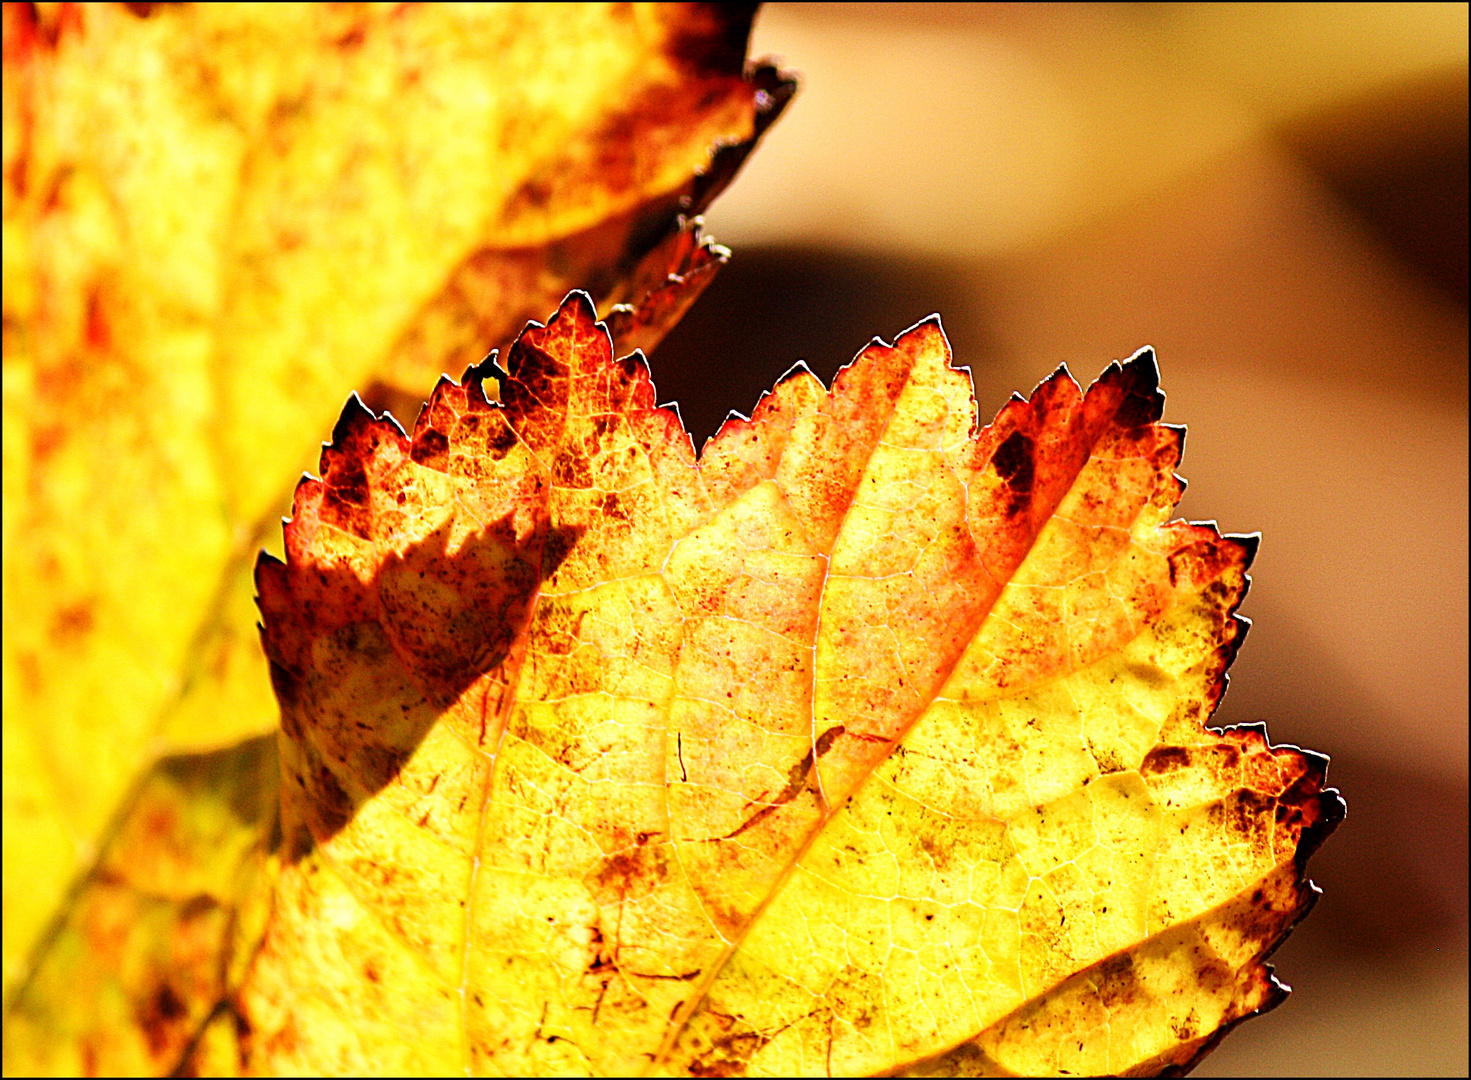 " Goldener Herbst "